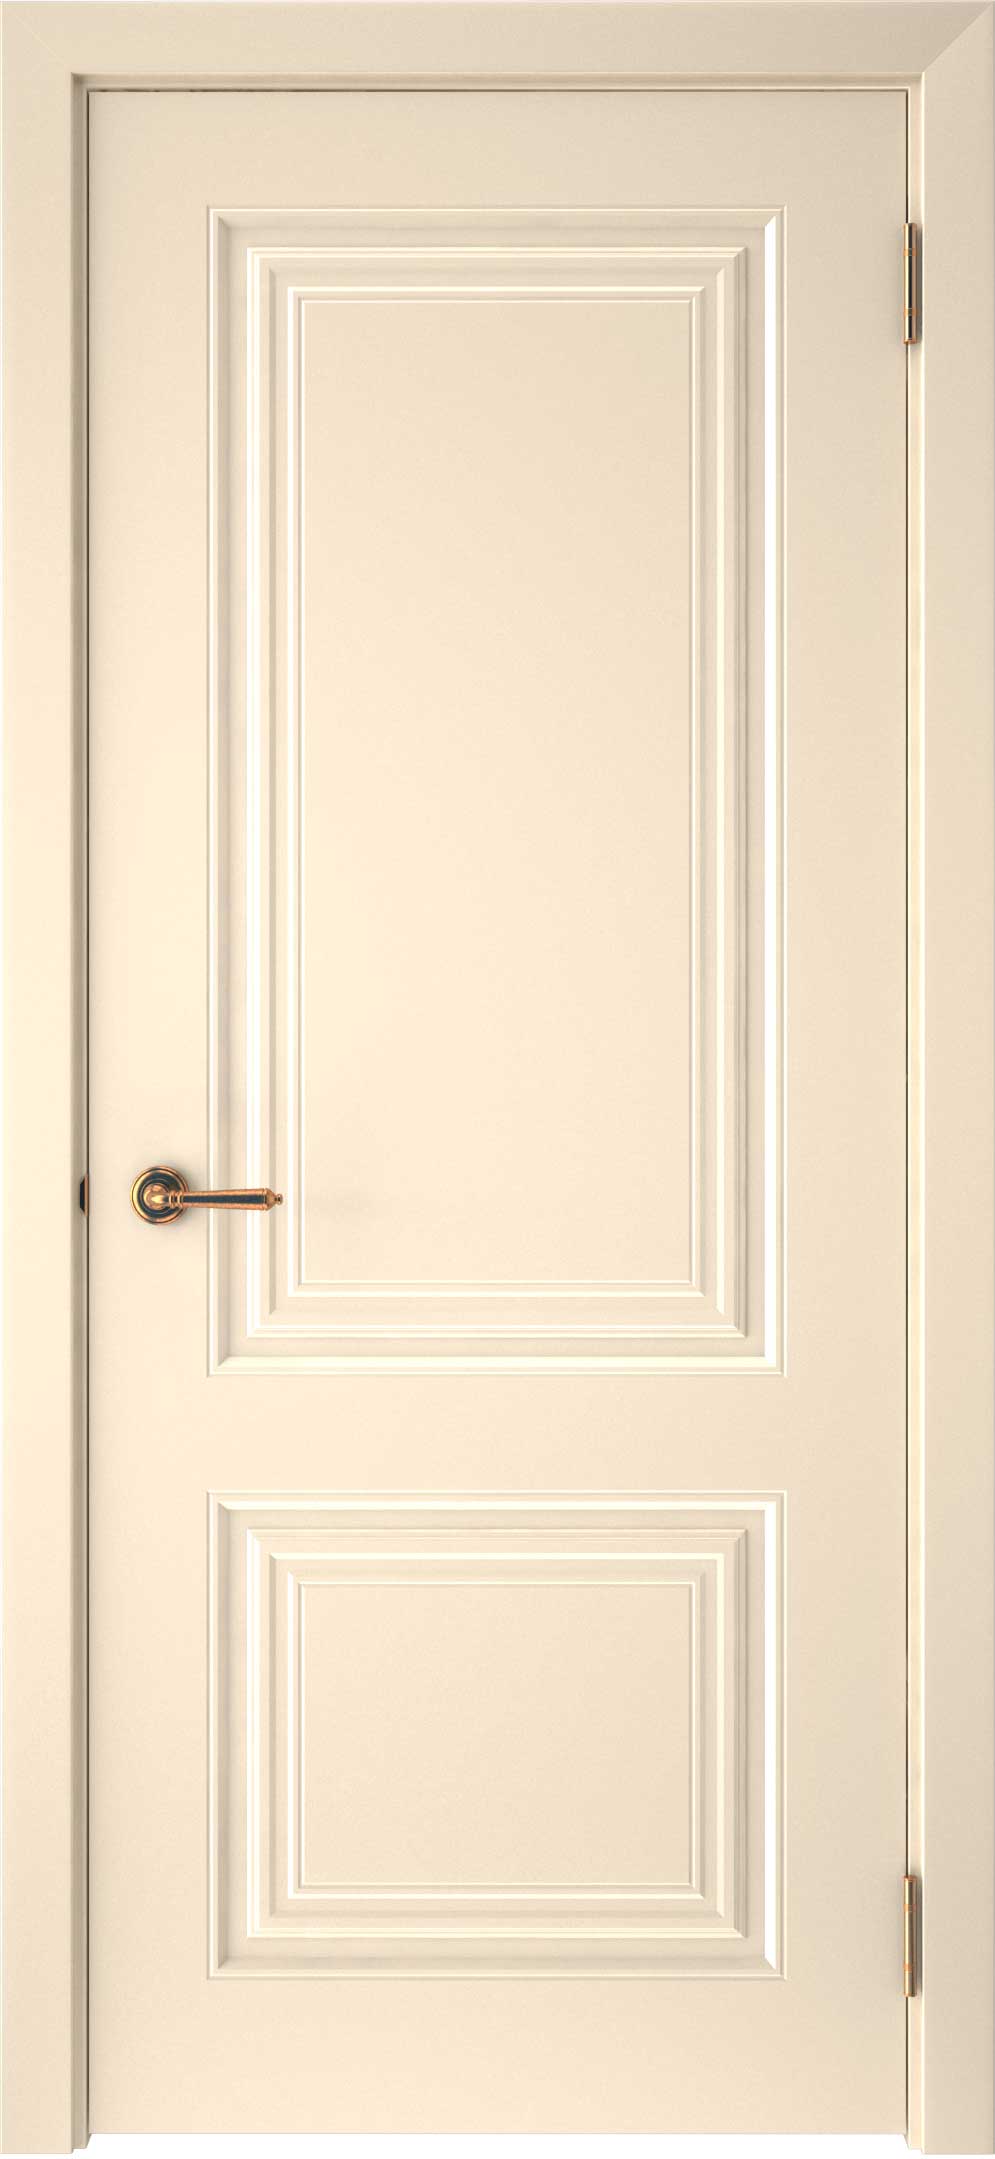 Двери крашеные (Эмаль) ТЕКОНА Смальта-42 глухое Ваниль ral размер 200 х 60 см. артикул F0000092478